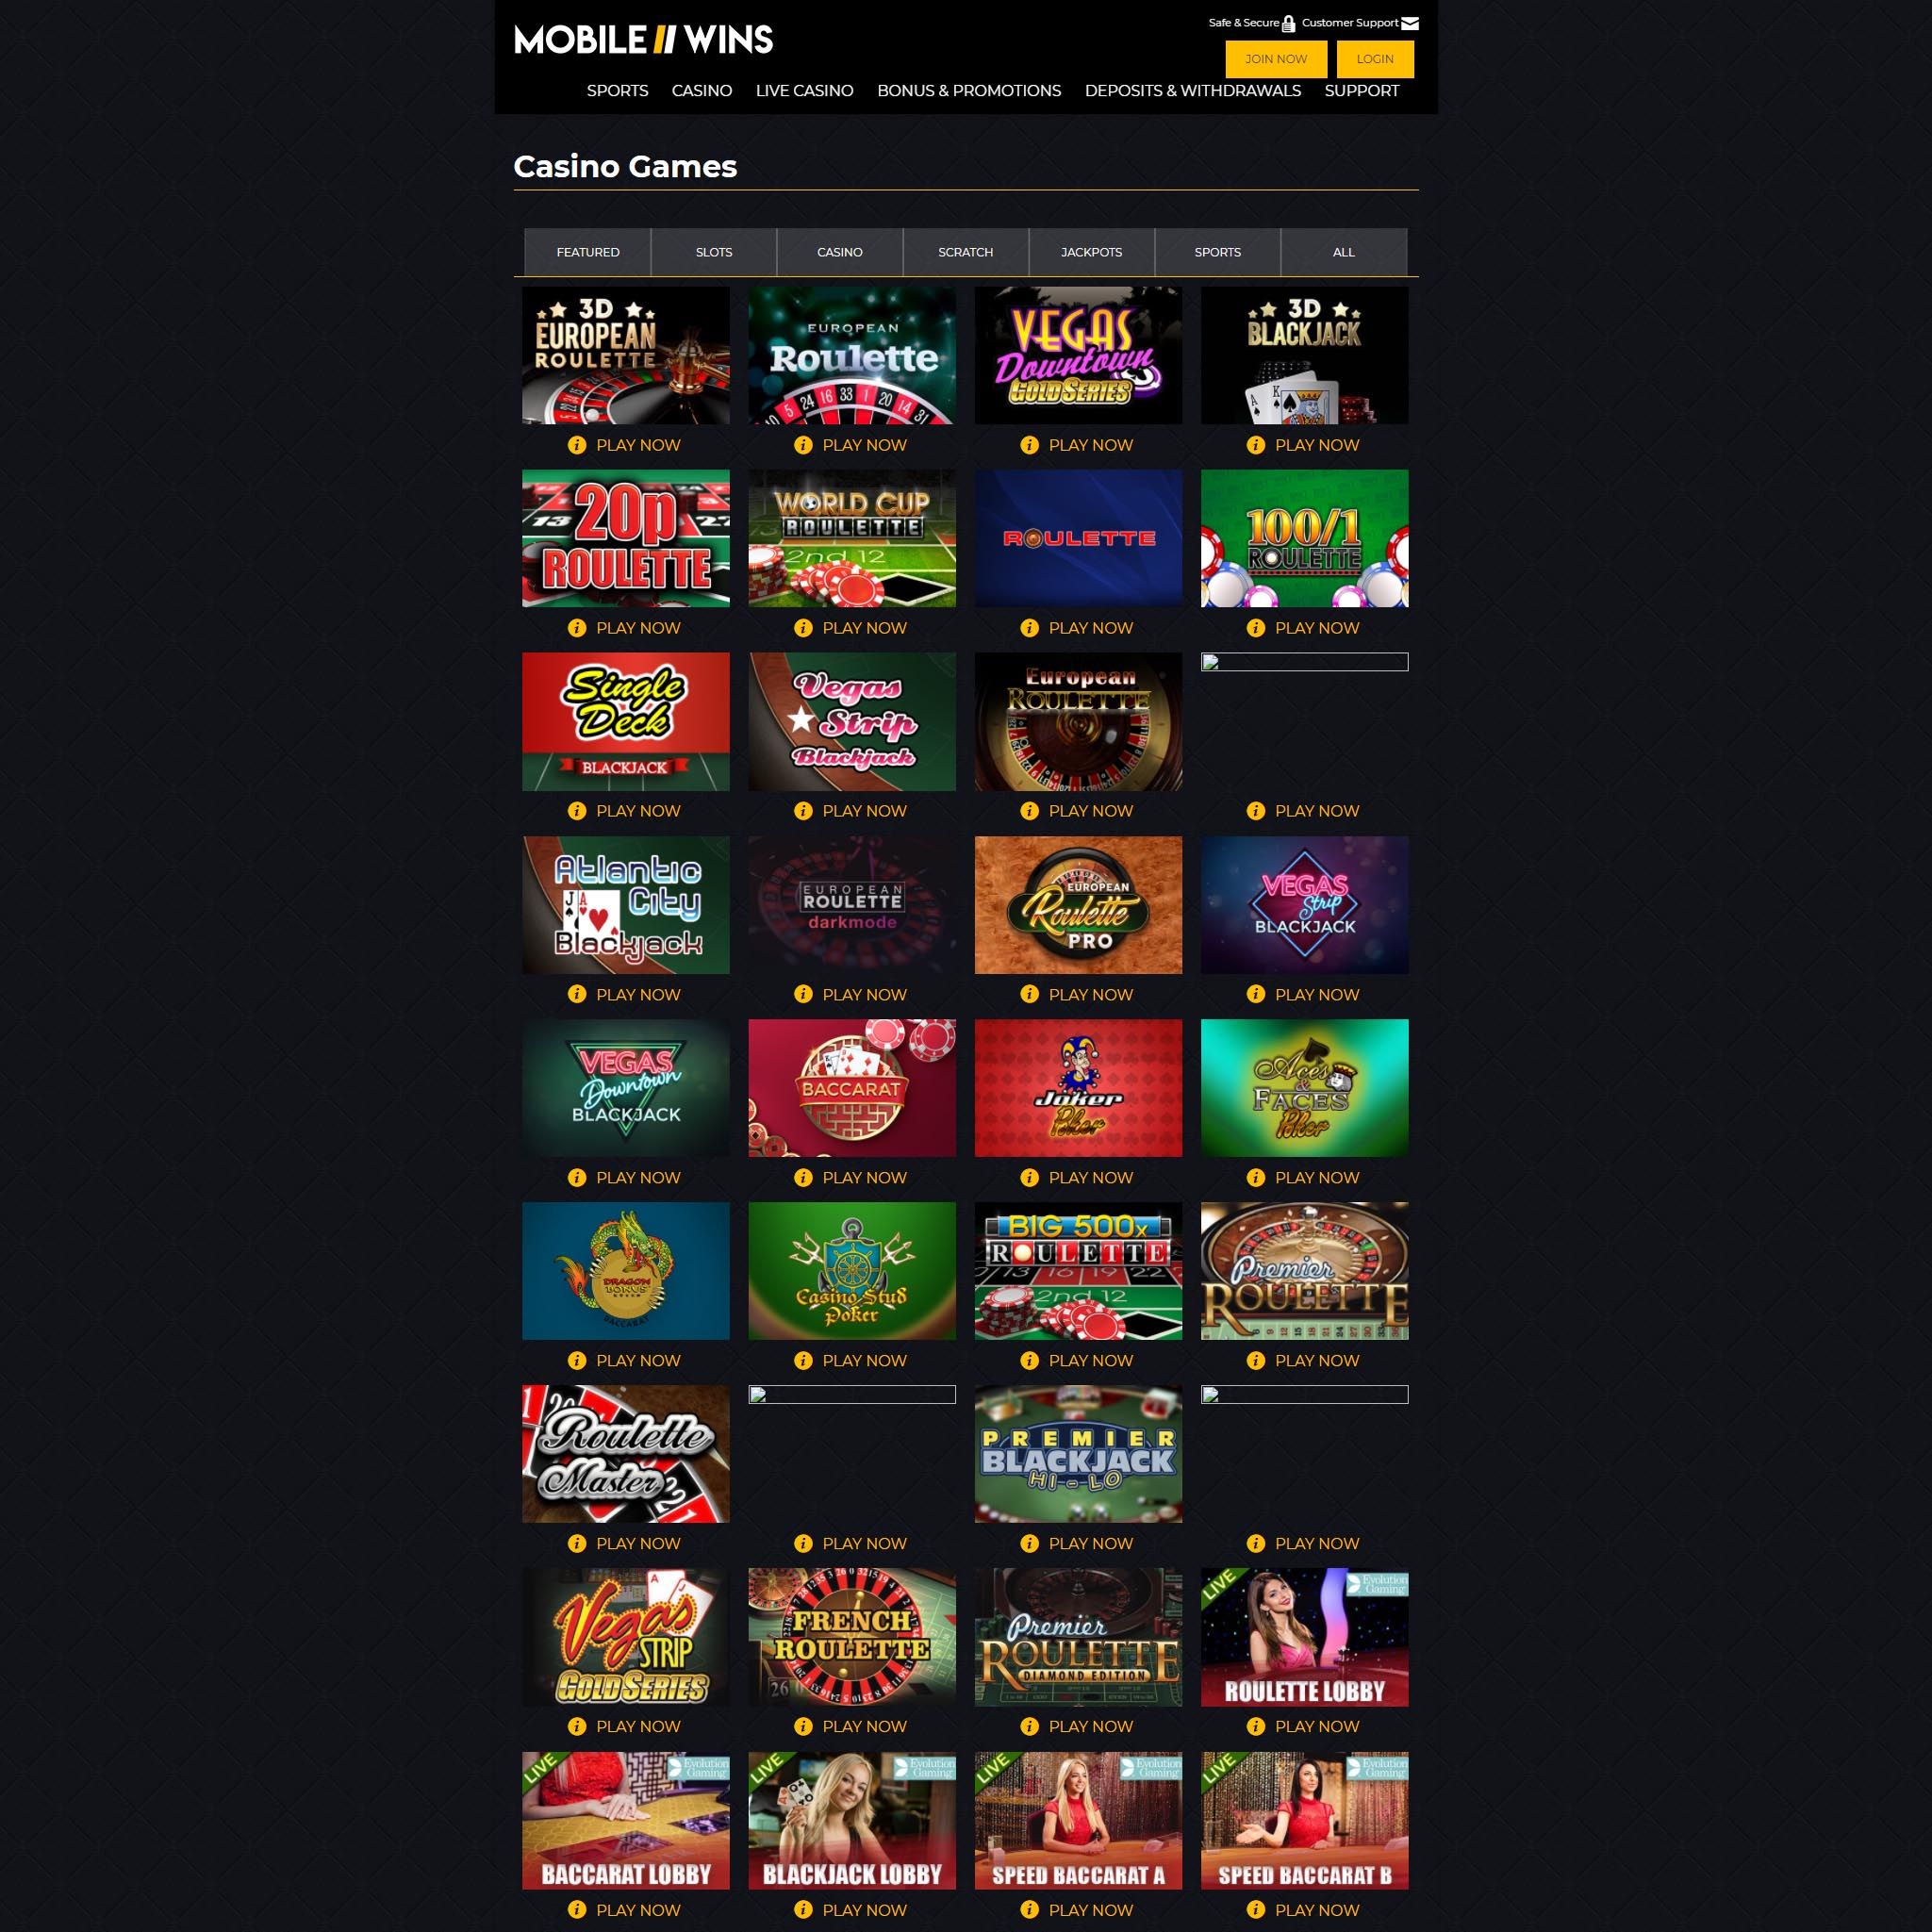 Mobile Wins Casino game catalogue